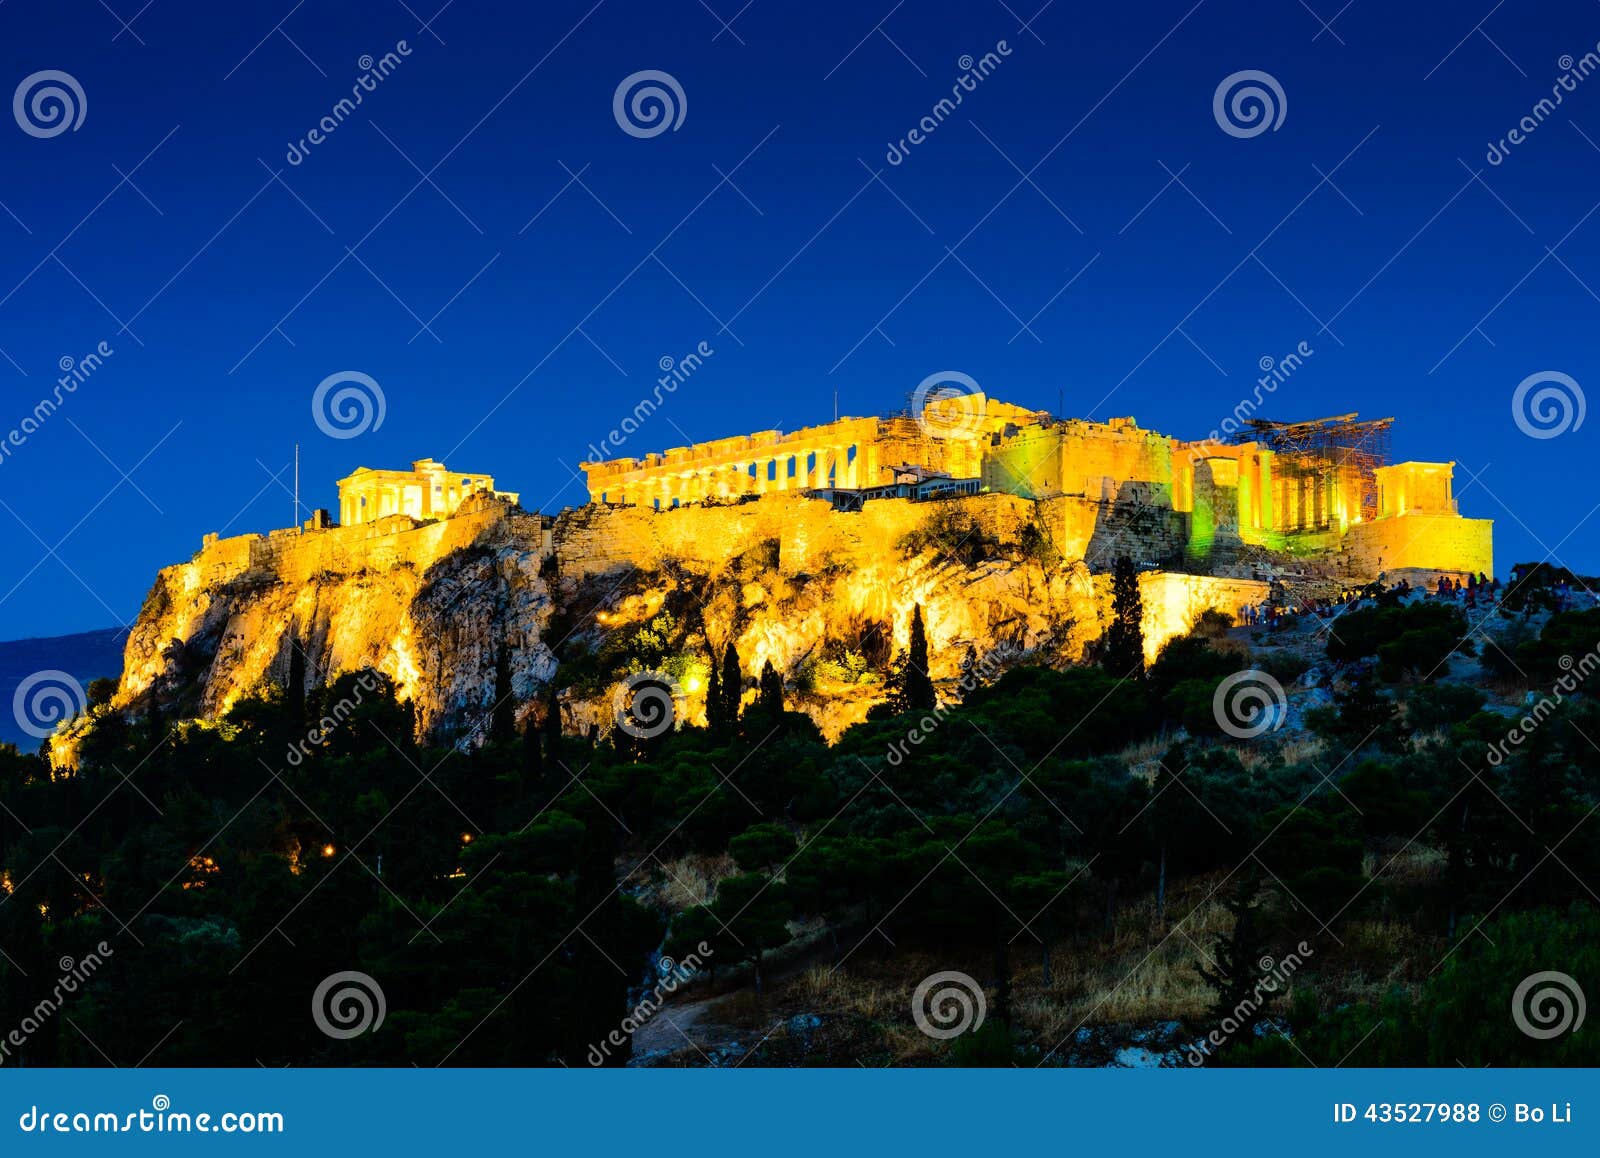 night scenes of acropolis and parthenon